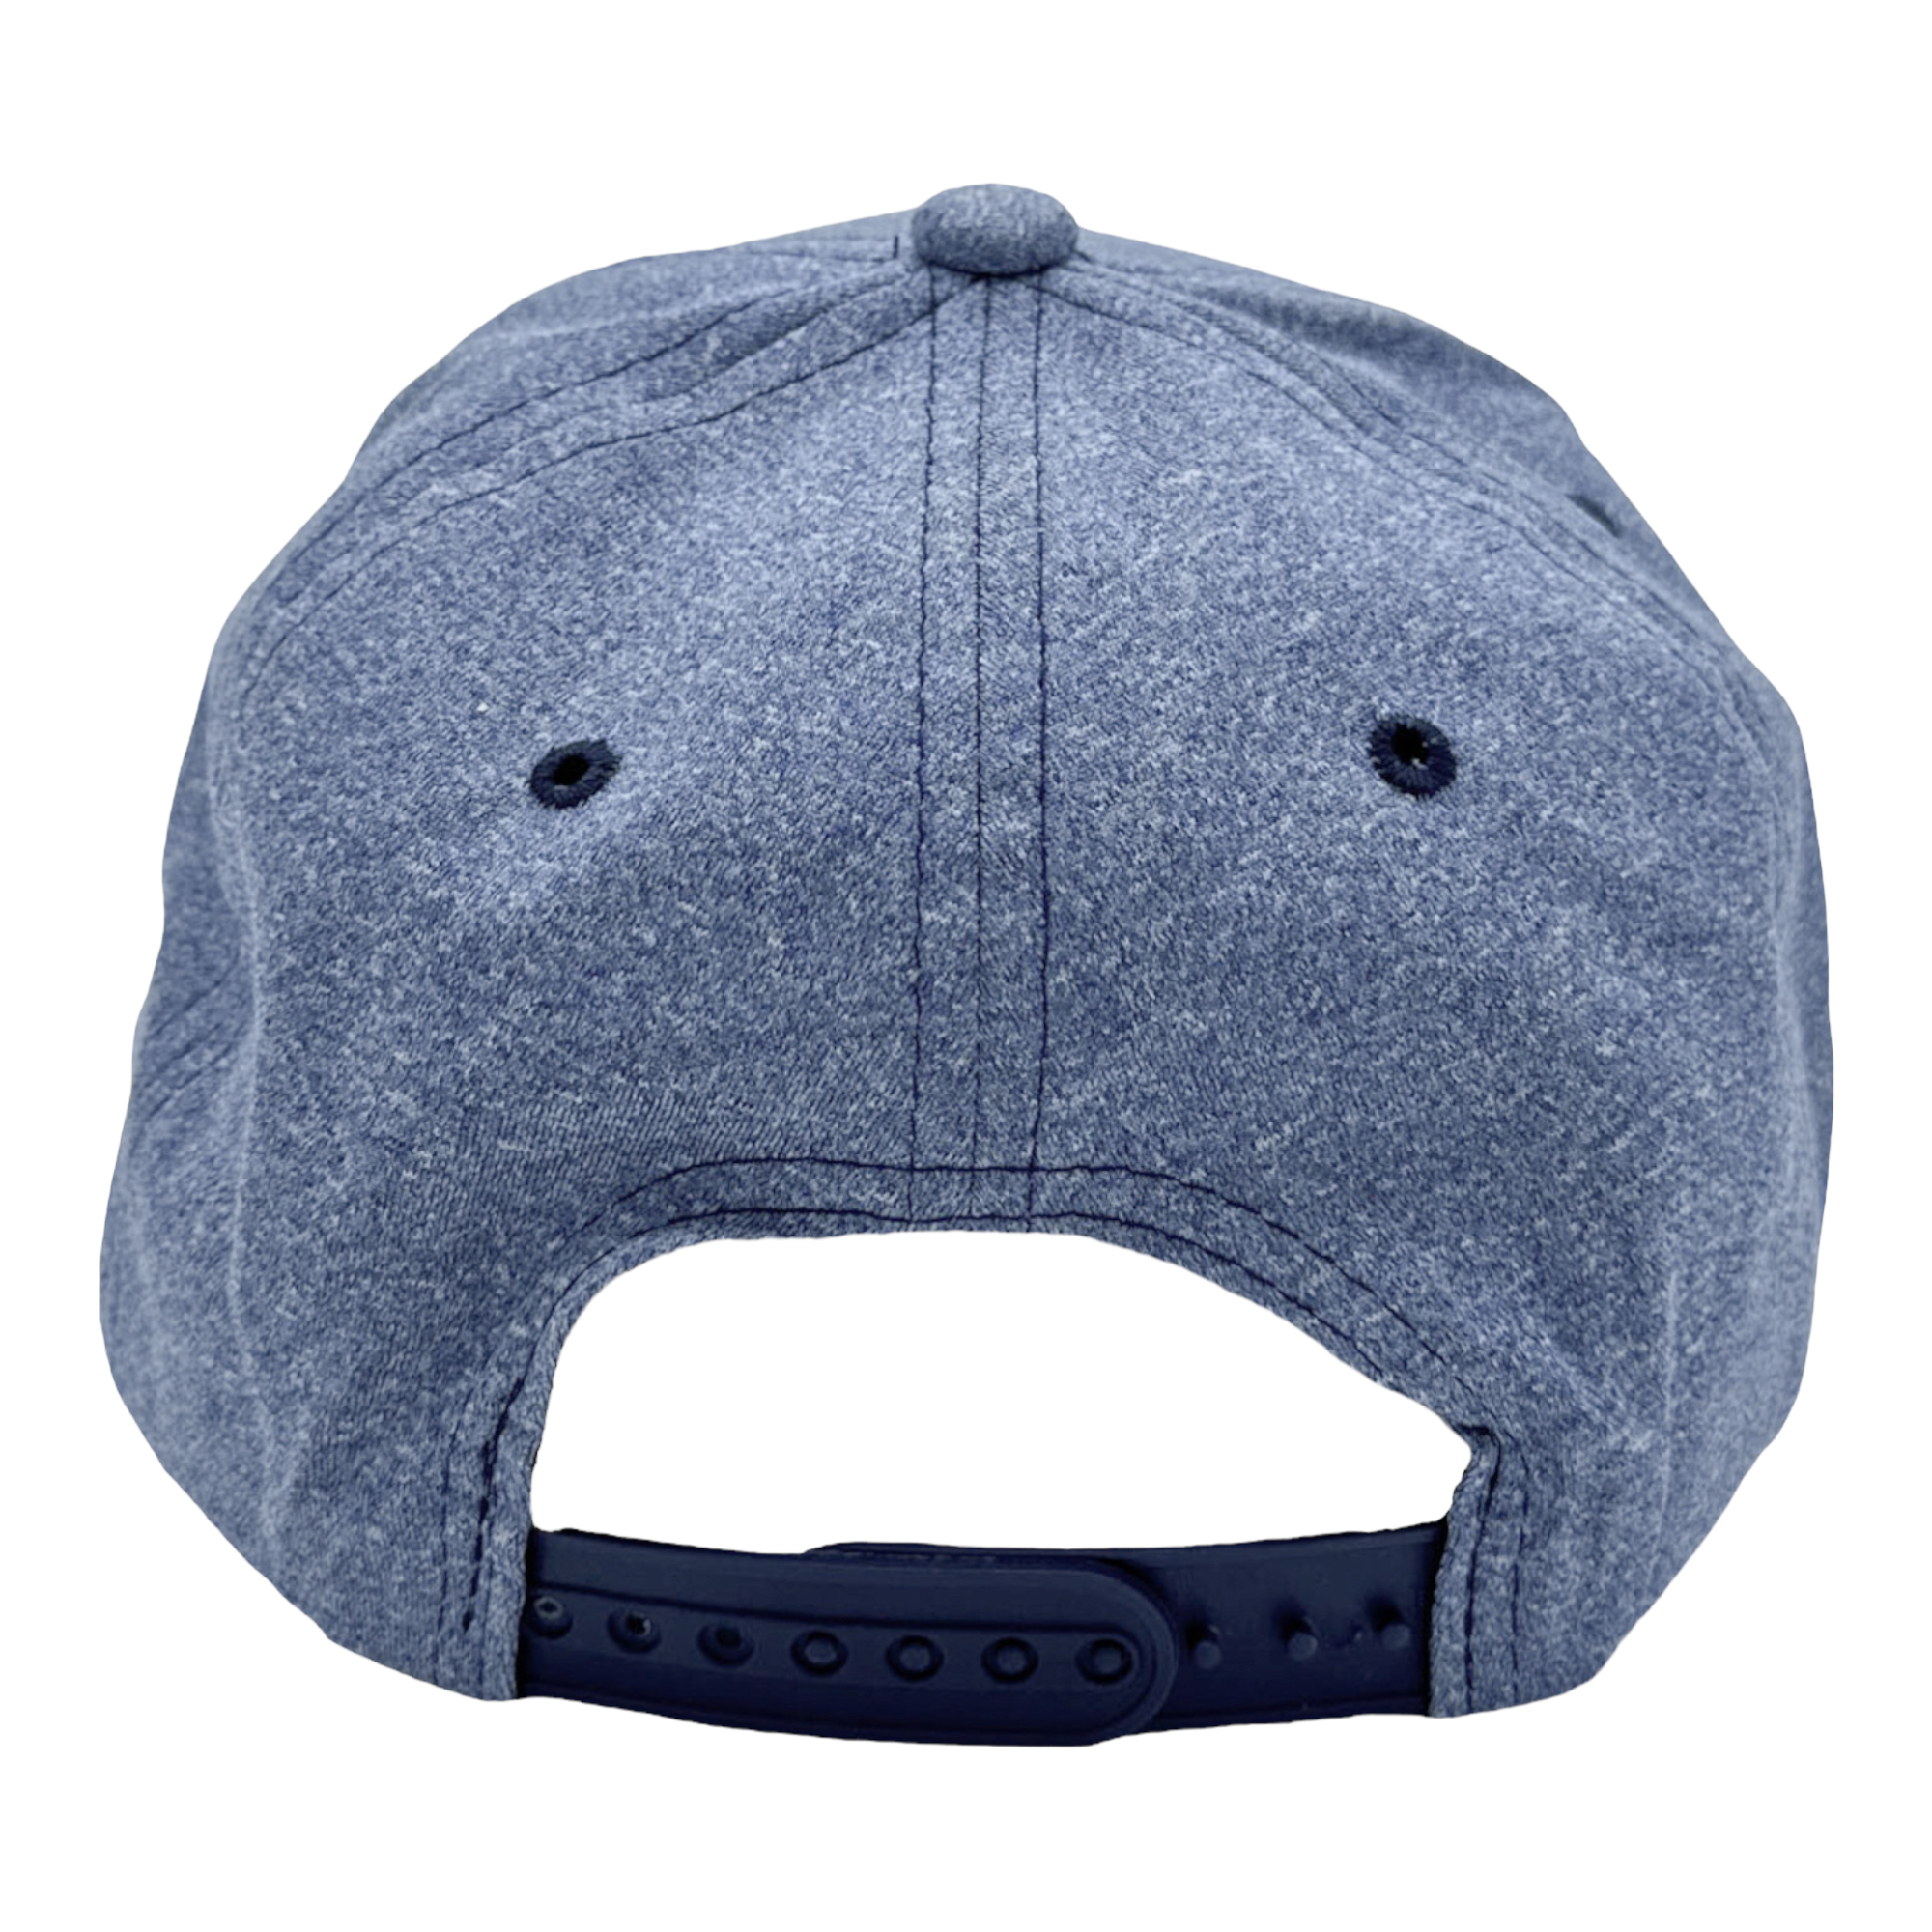 Here Fishy Fishy Fishy Hat Funny Outdoor Fishing Lovers Cap – Nerdy Shirts